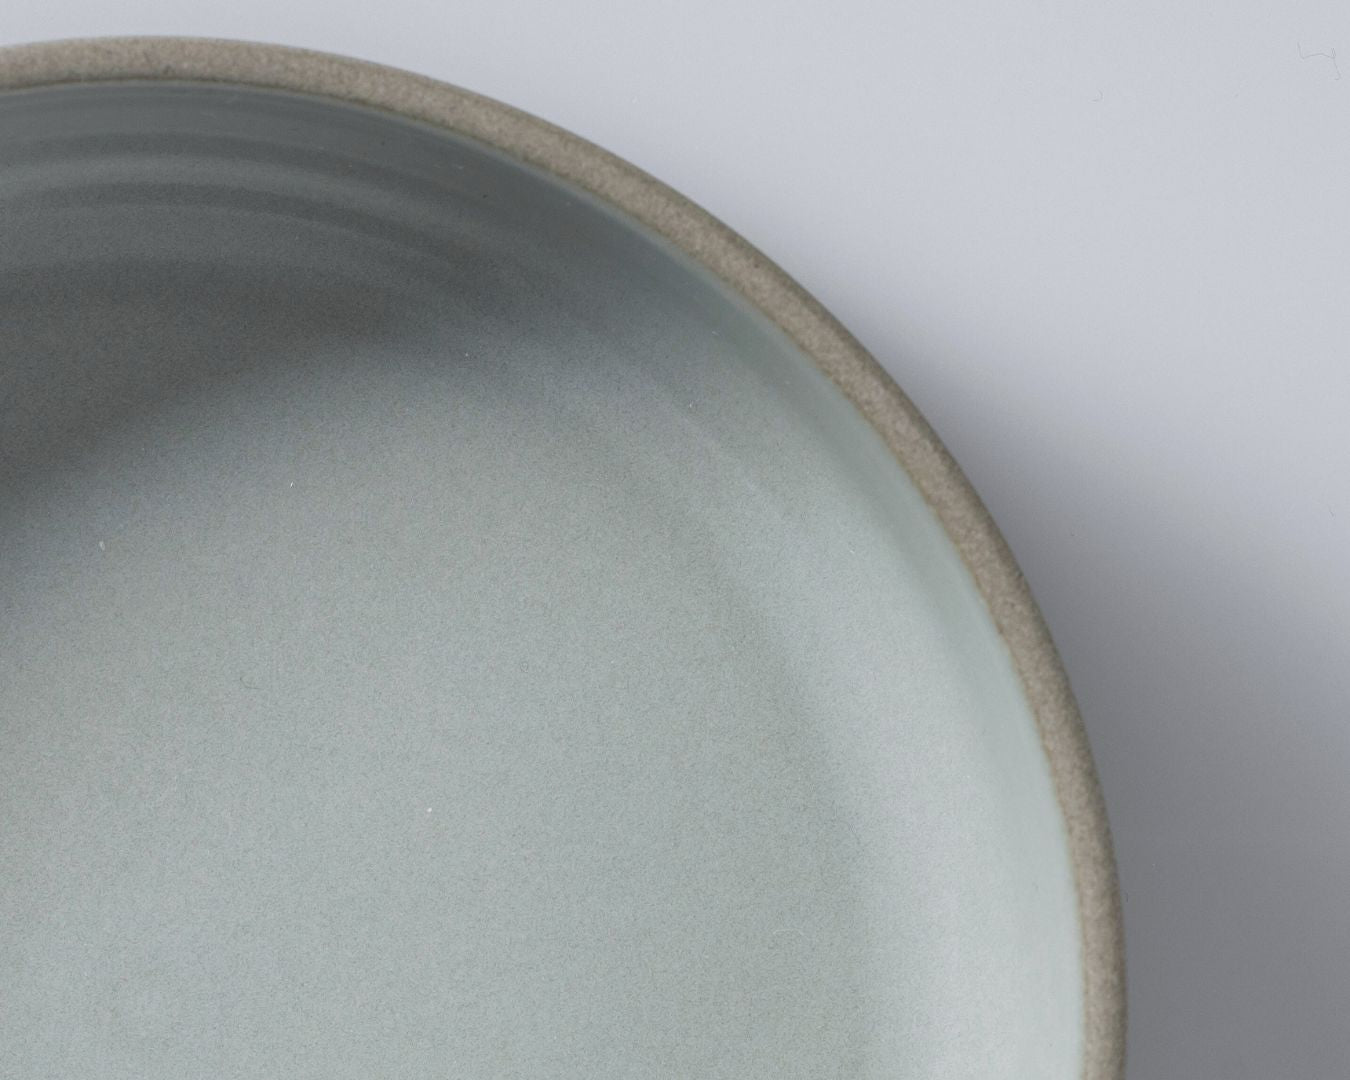 Hasami Porcelain Shallow Bowl 14.5cm Ash White